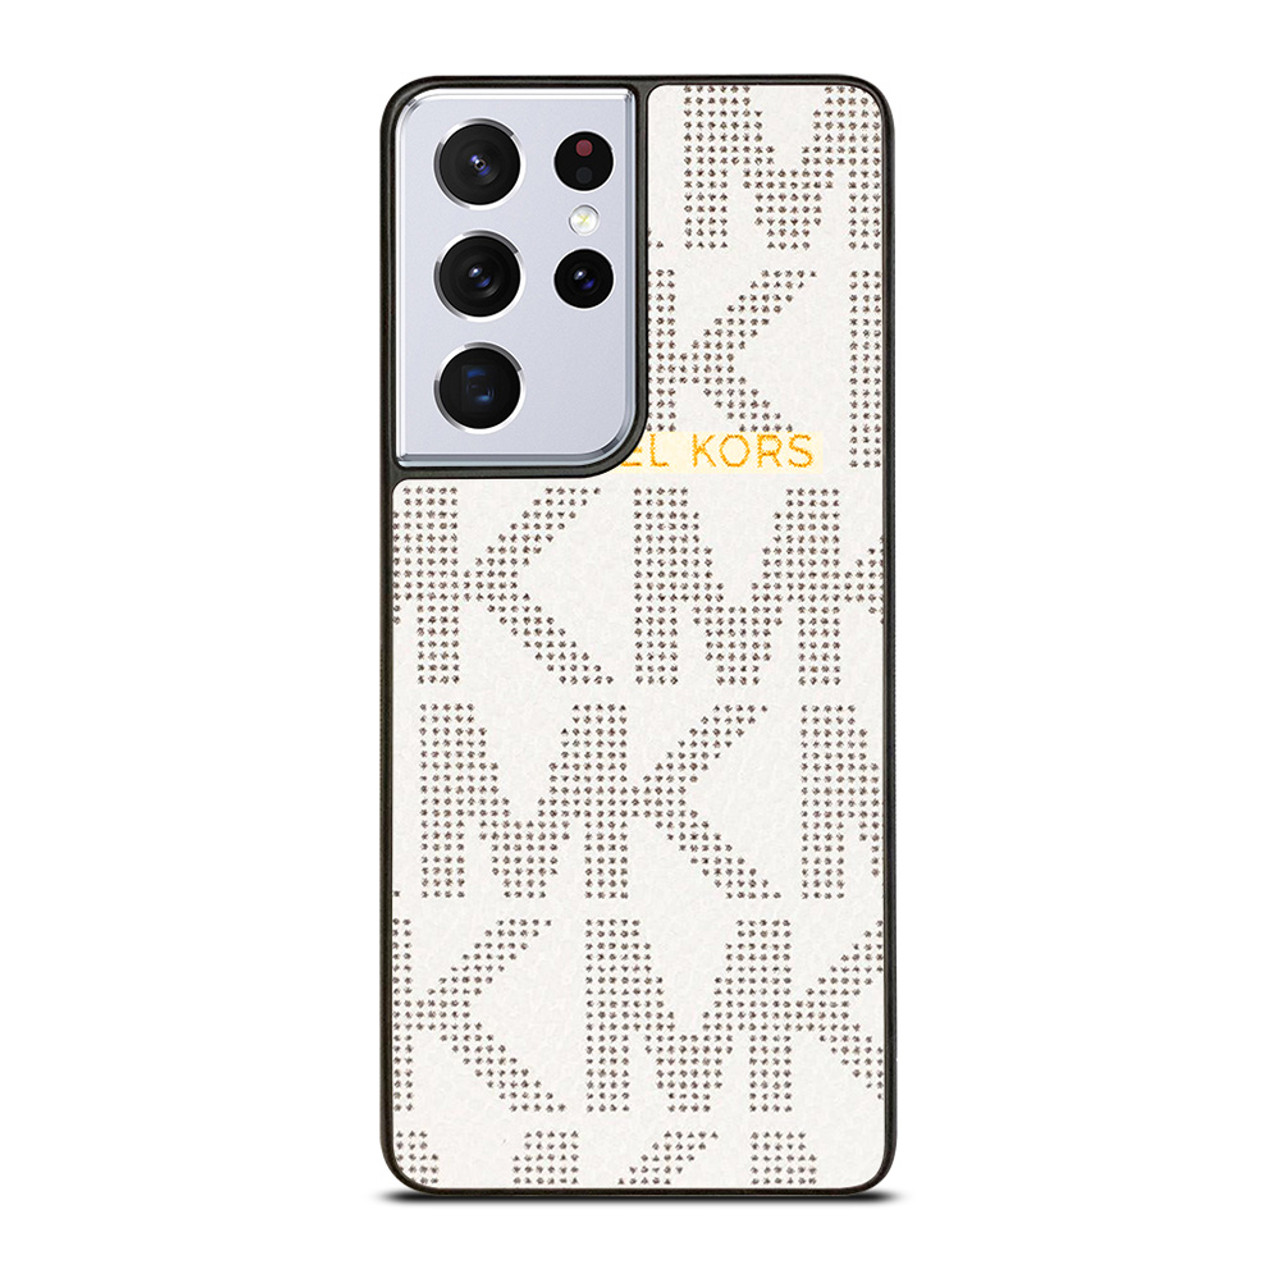 MICHAEL KORS MK POLKADOT iPhone 12 Pro Max Case Cover